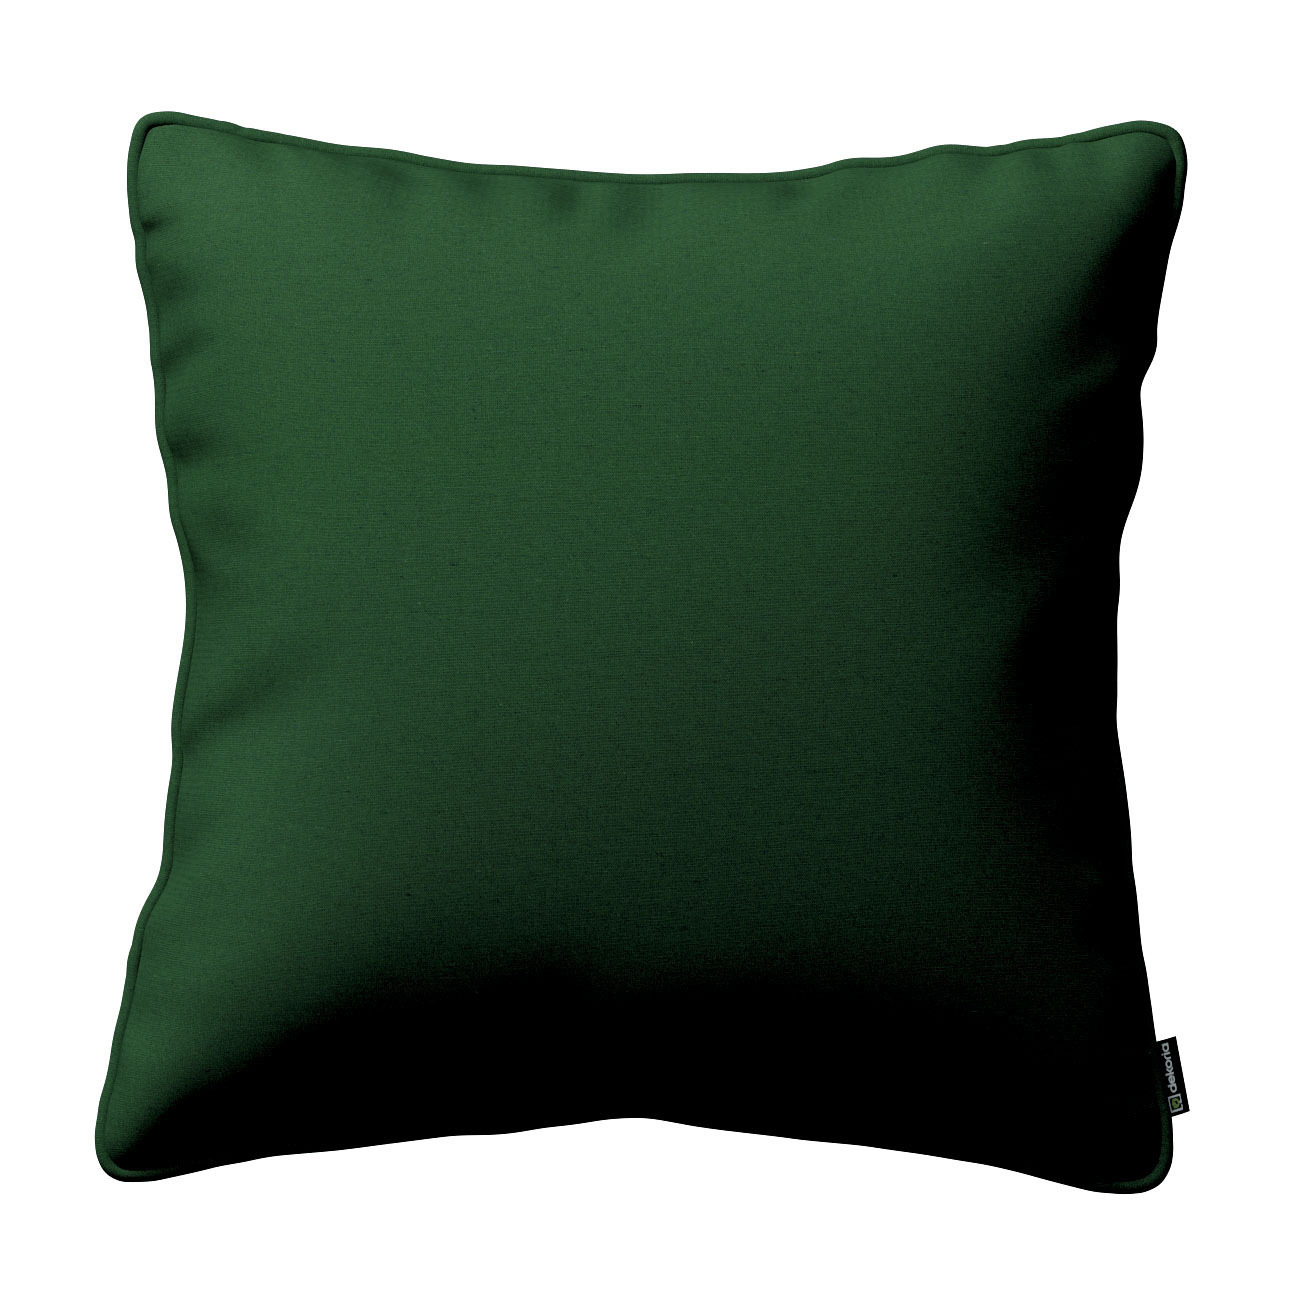 Kissenhülle Gabi mit Paspel, dunkelgrün, 60 x 60 cm, Quadro (144-33) günstig online kaufen